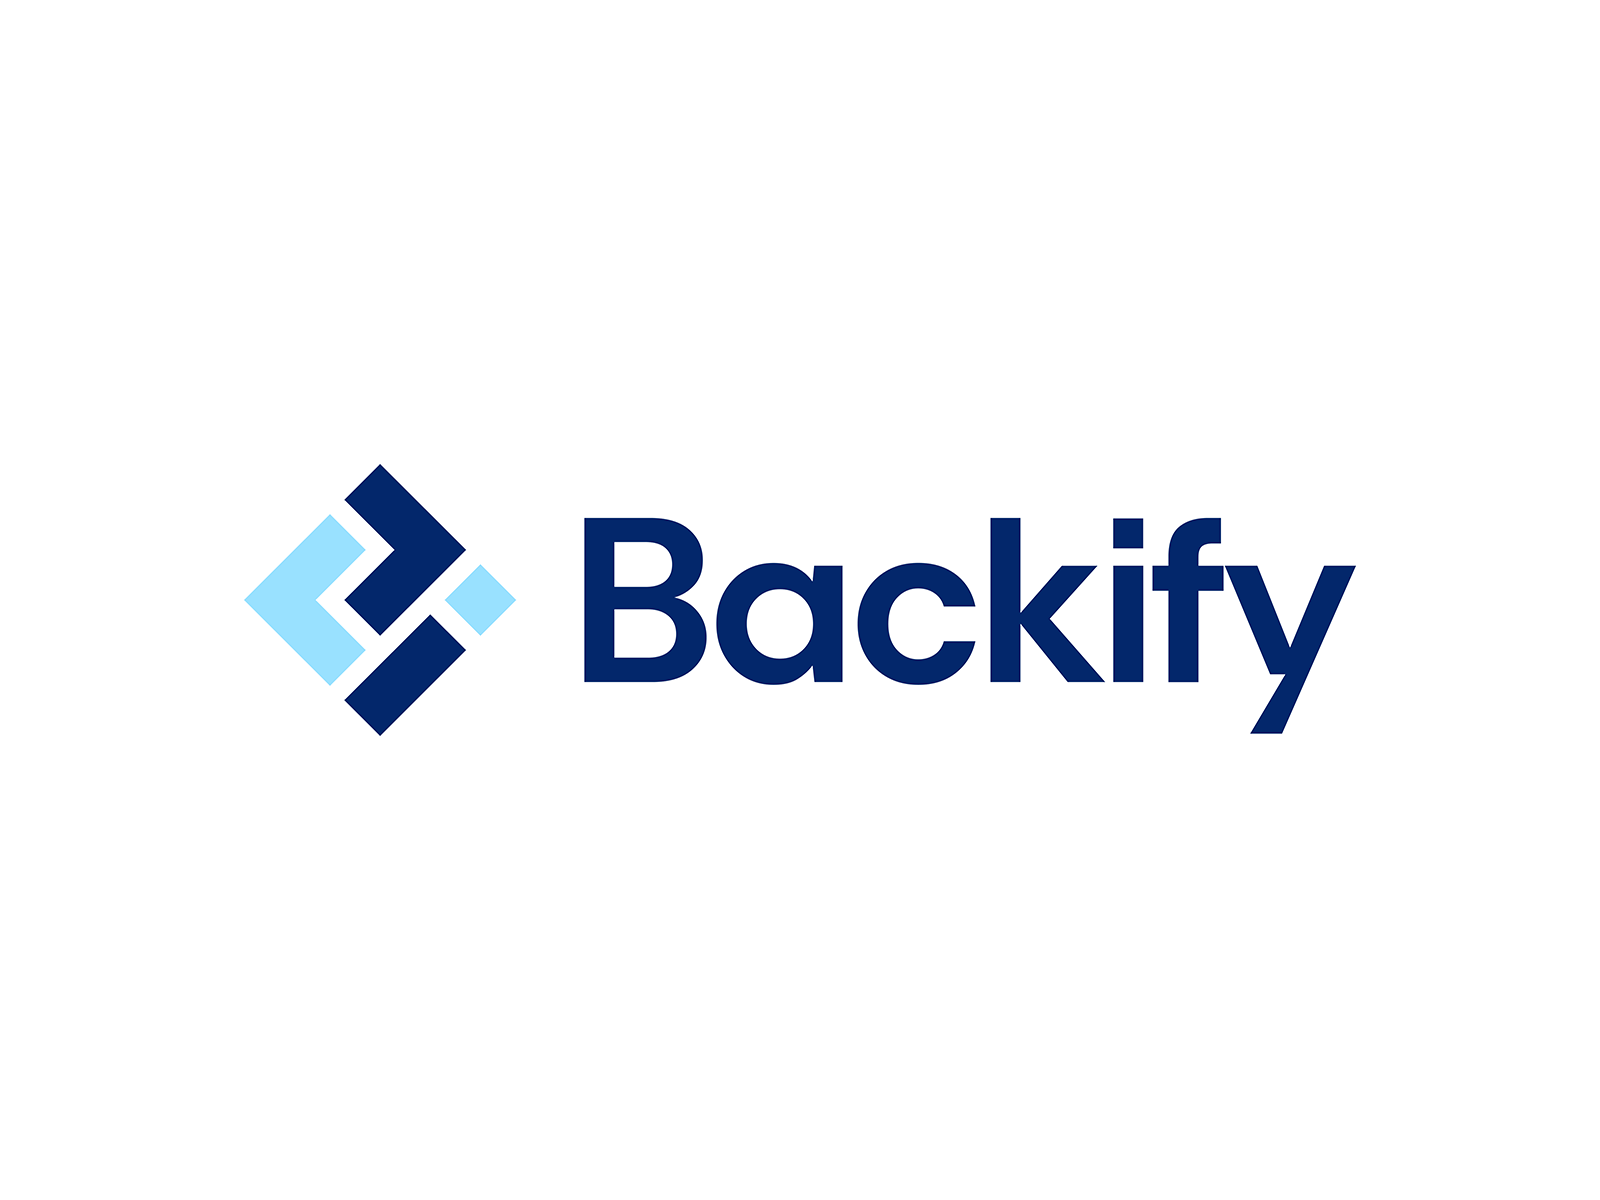 Backify Logo Design by Erşad Başbağ on Dribbble